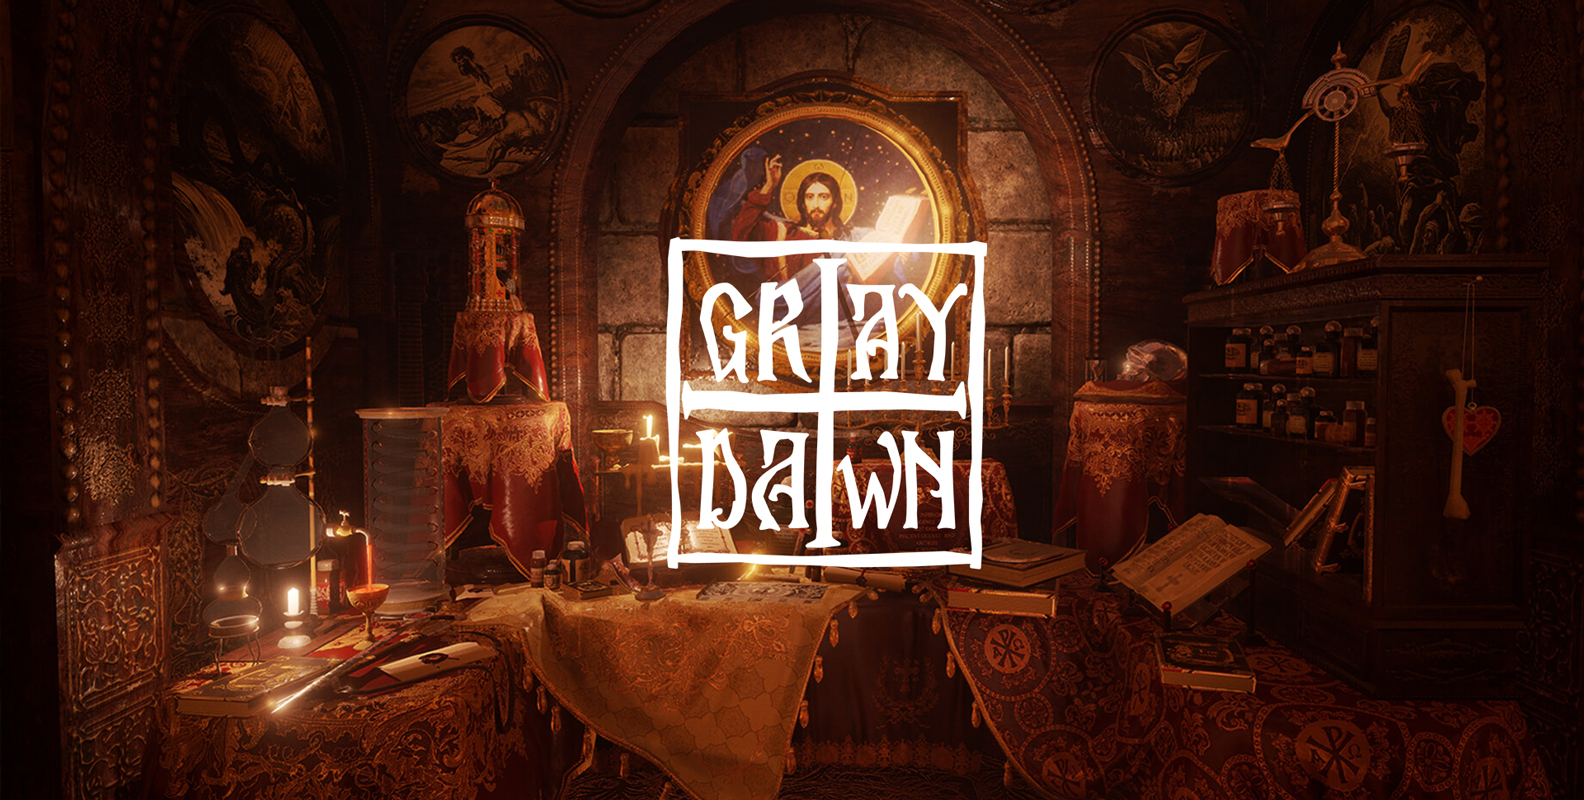 Gray Dawn - A Religious Horror Game